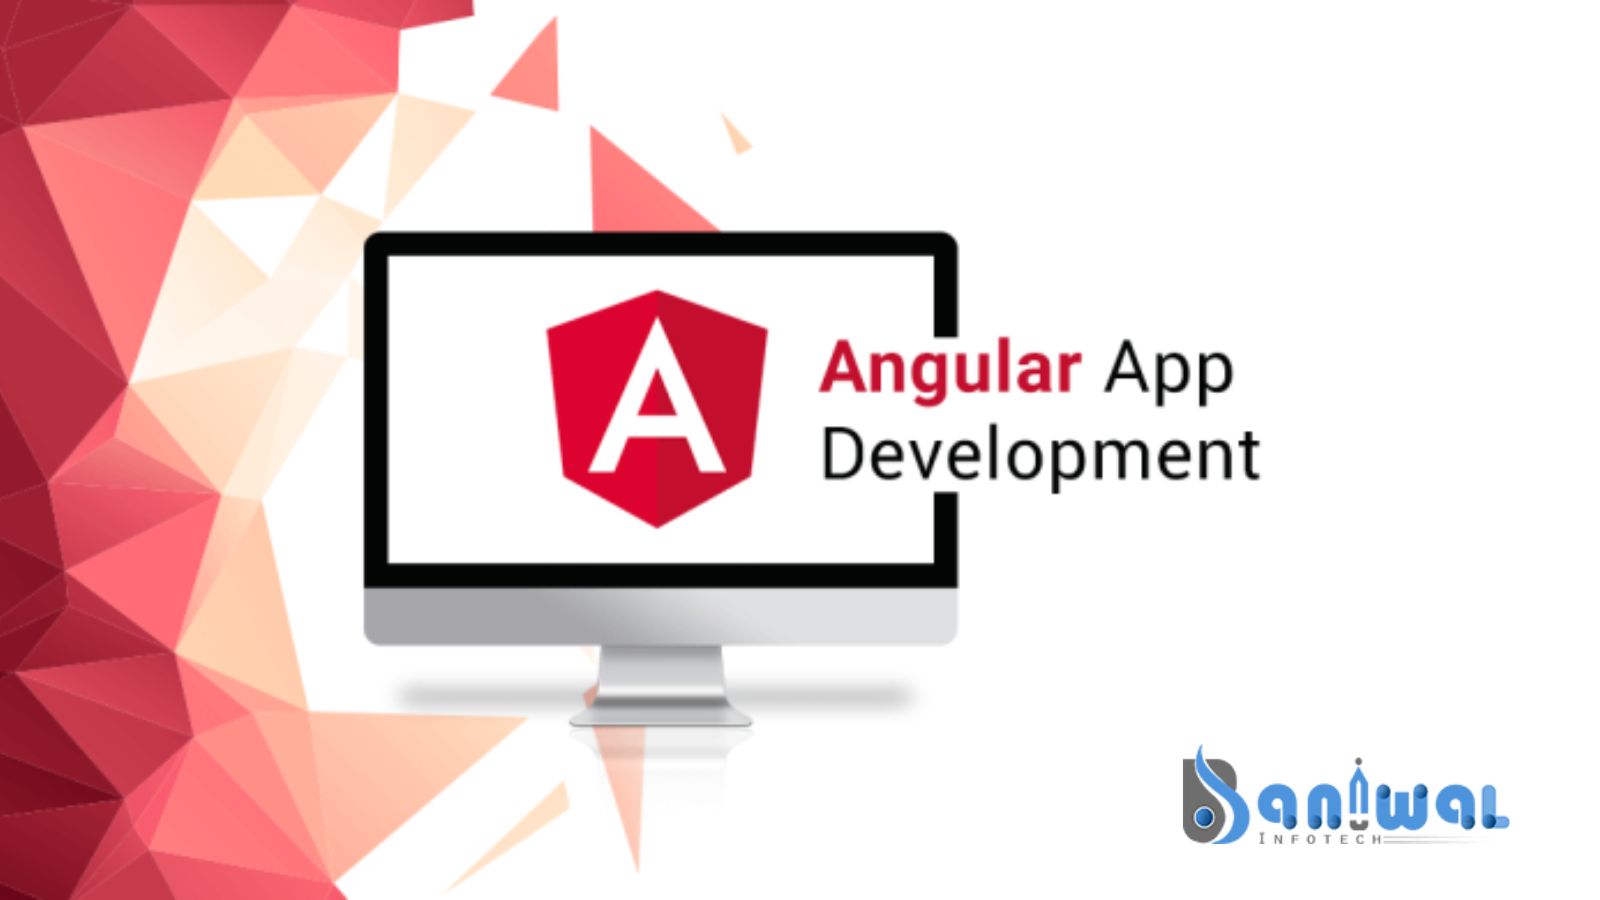 Angularjs web app development | Baniwal Infotech